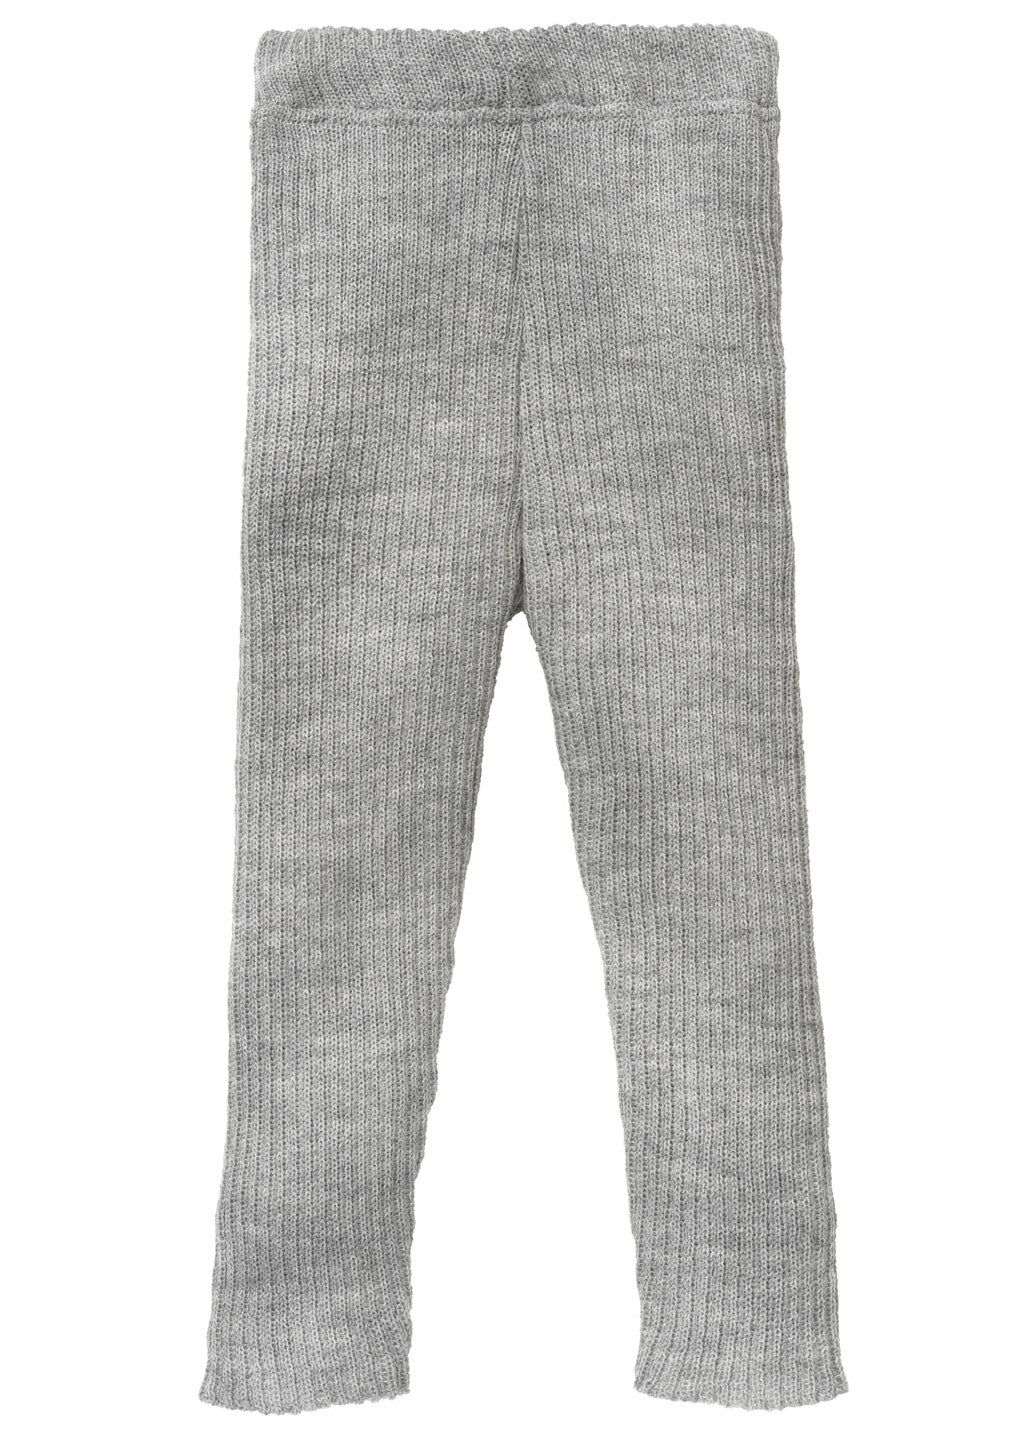 Disana lightweight wool leggings in gray